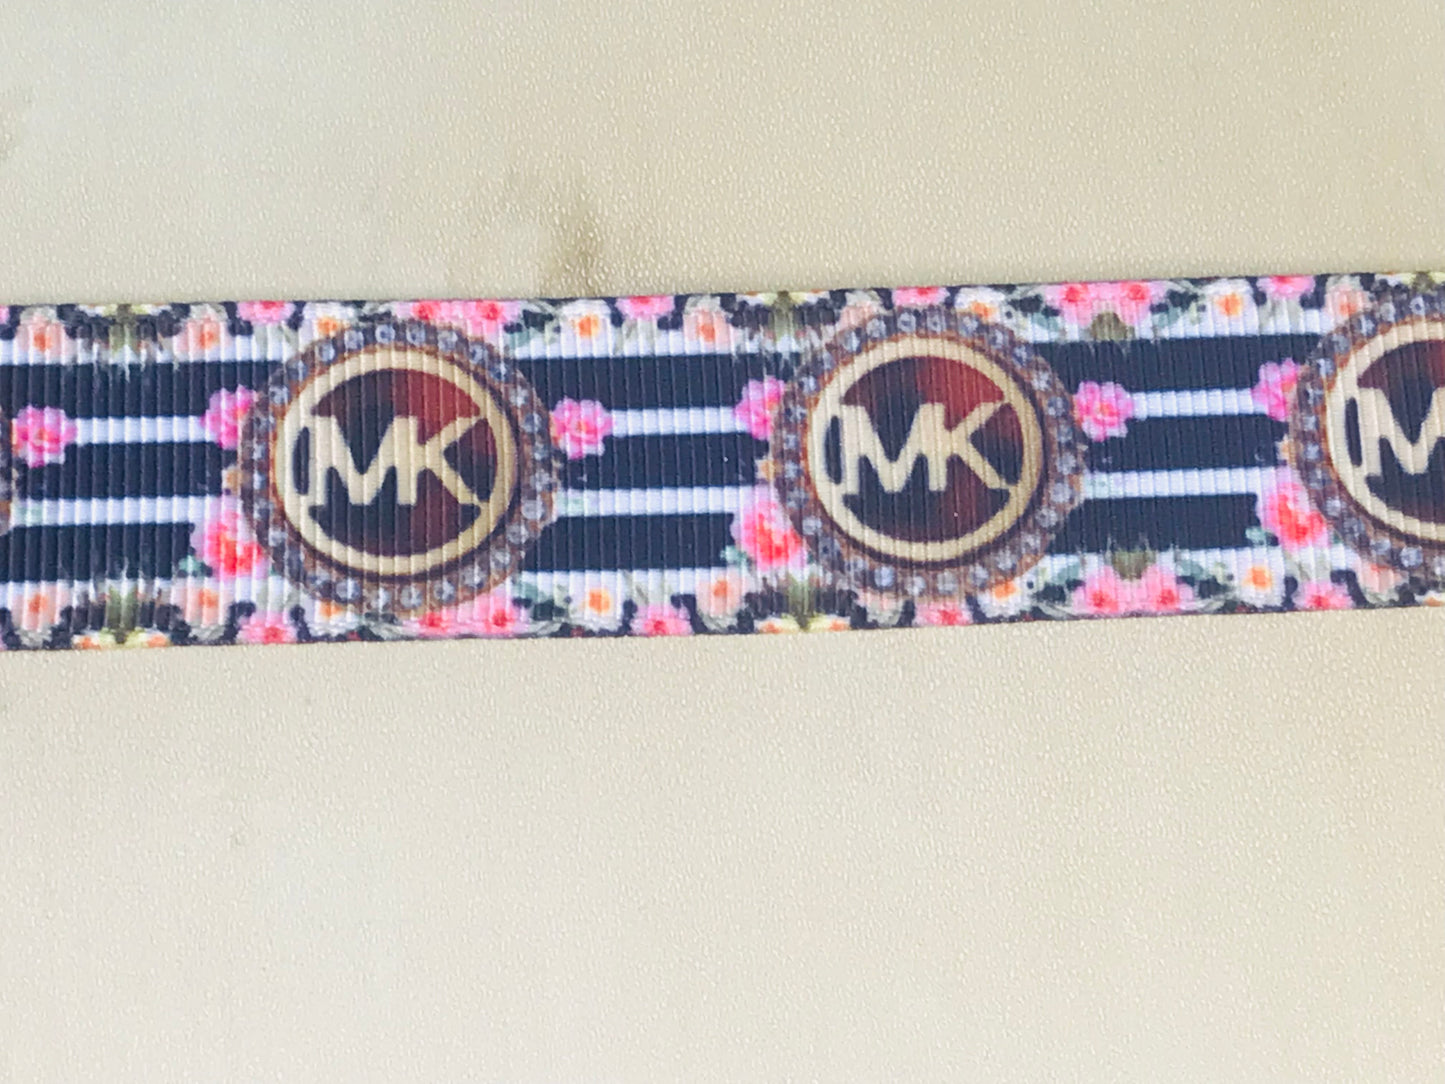 7/8" Wide Michael Kors MK Diamond Encrusted Logo With Black & White Stripes & Flowers Printed Grosgrain Ribbon